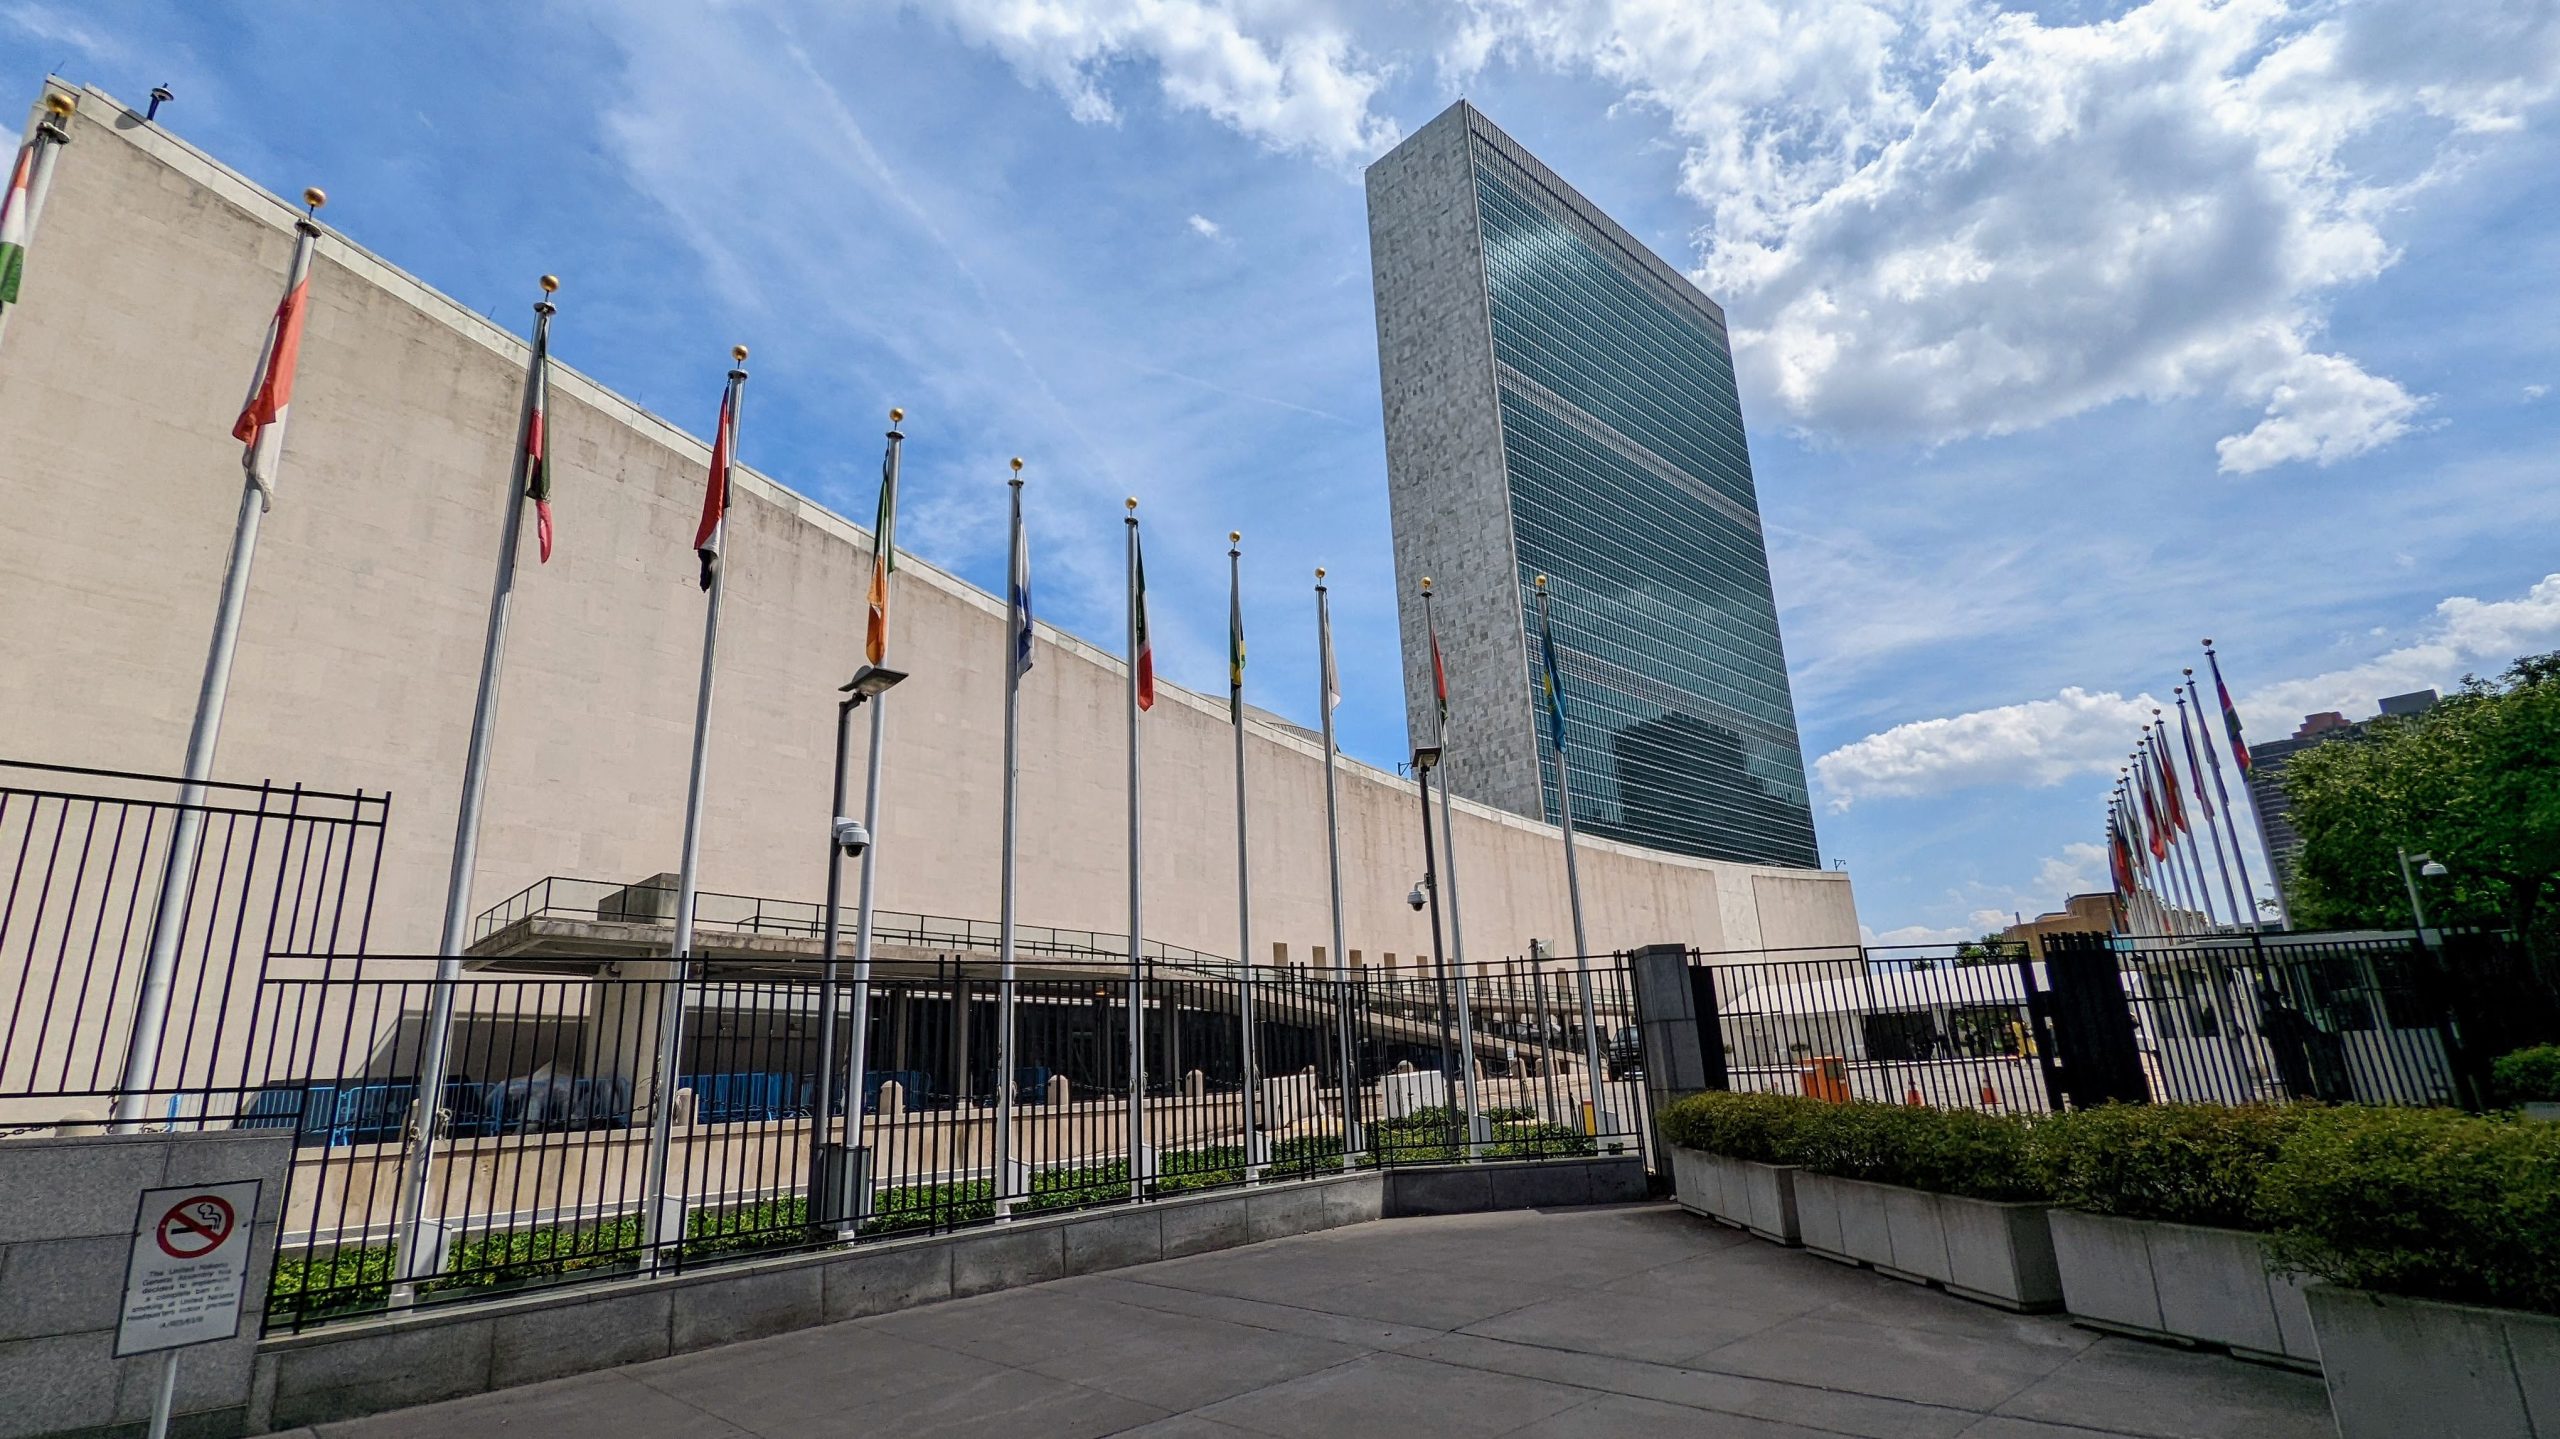 UN Headquarters, photo by John Coonrod